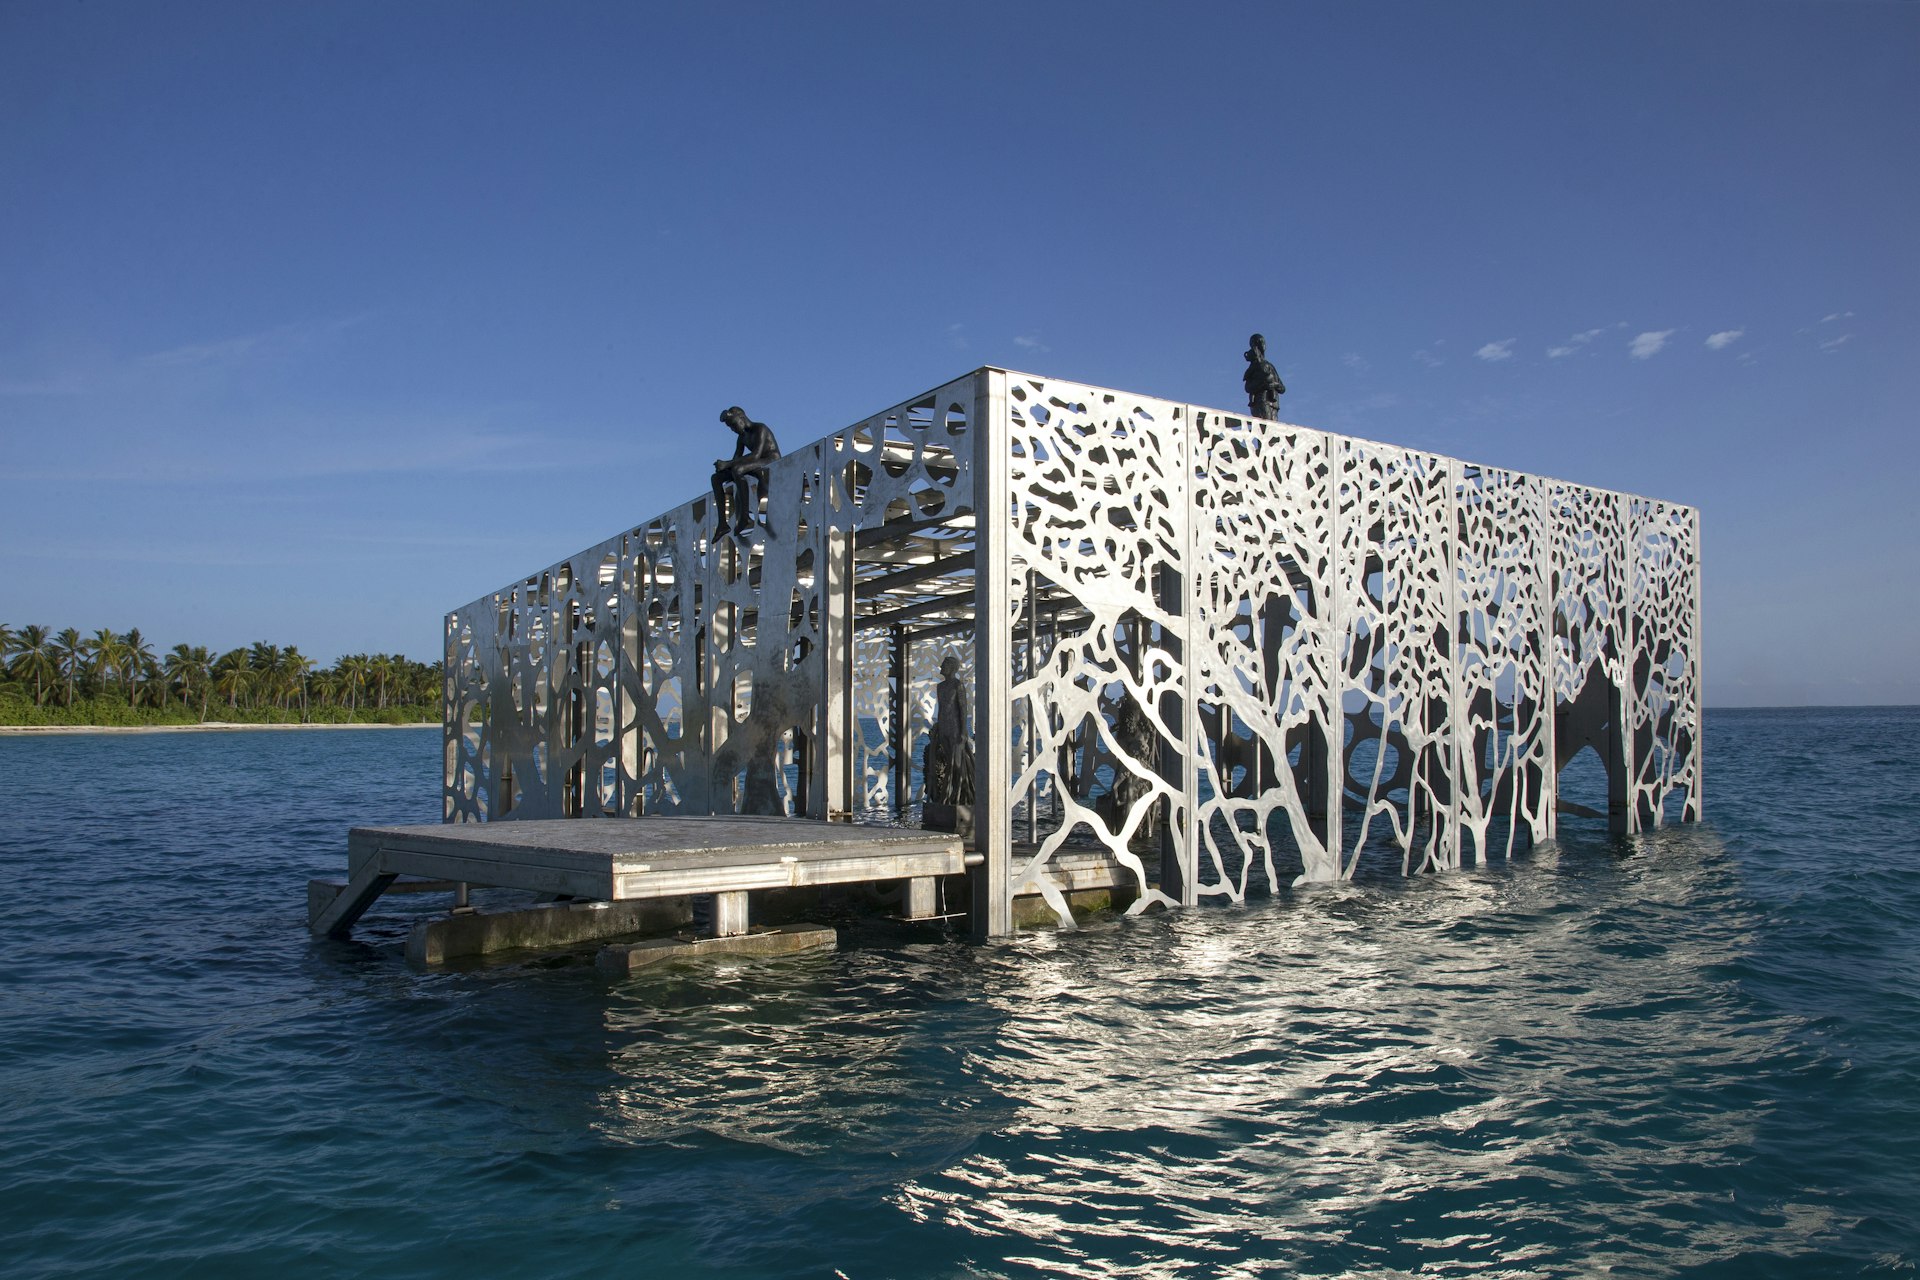 The “Coralarium” sculpture and artificial reef by Jason deCaires Taylor, Fairmont Maldives Sirru Fen Fushi, Shaviyani Atoll, the Maldives